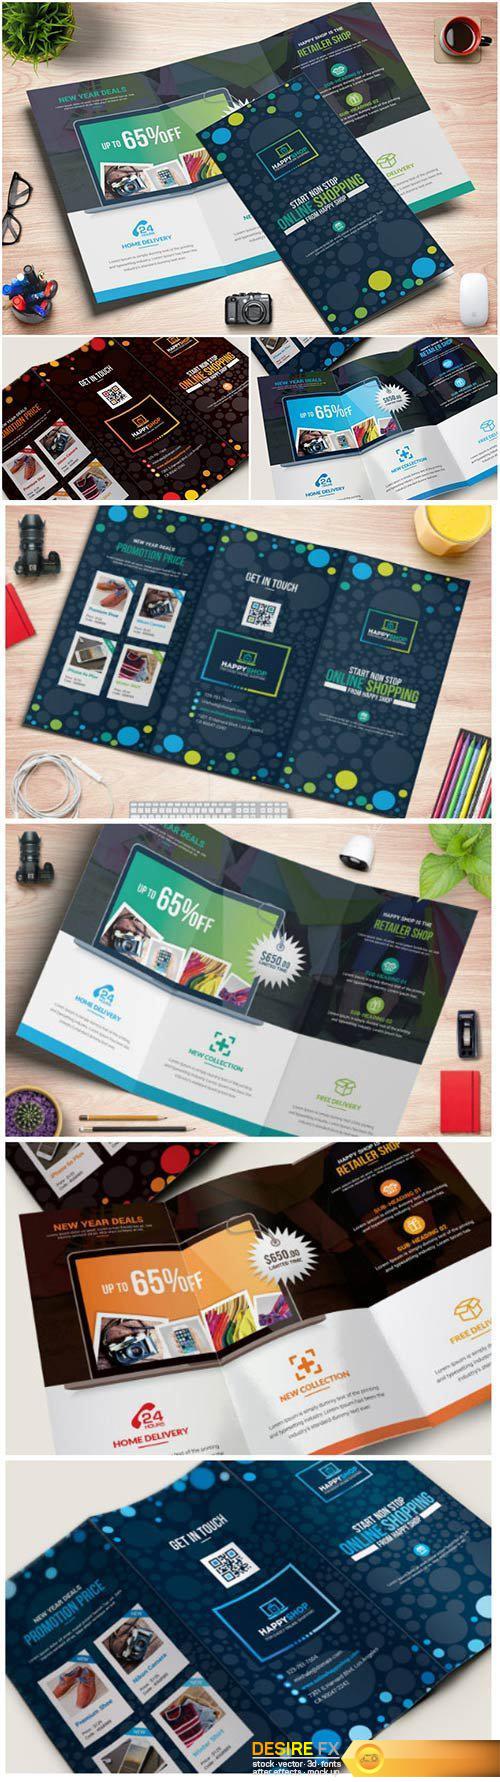 HappyShop : E-Commerce Tri-Fold Brochure